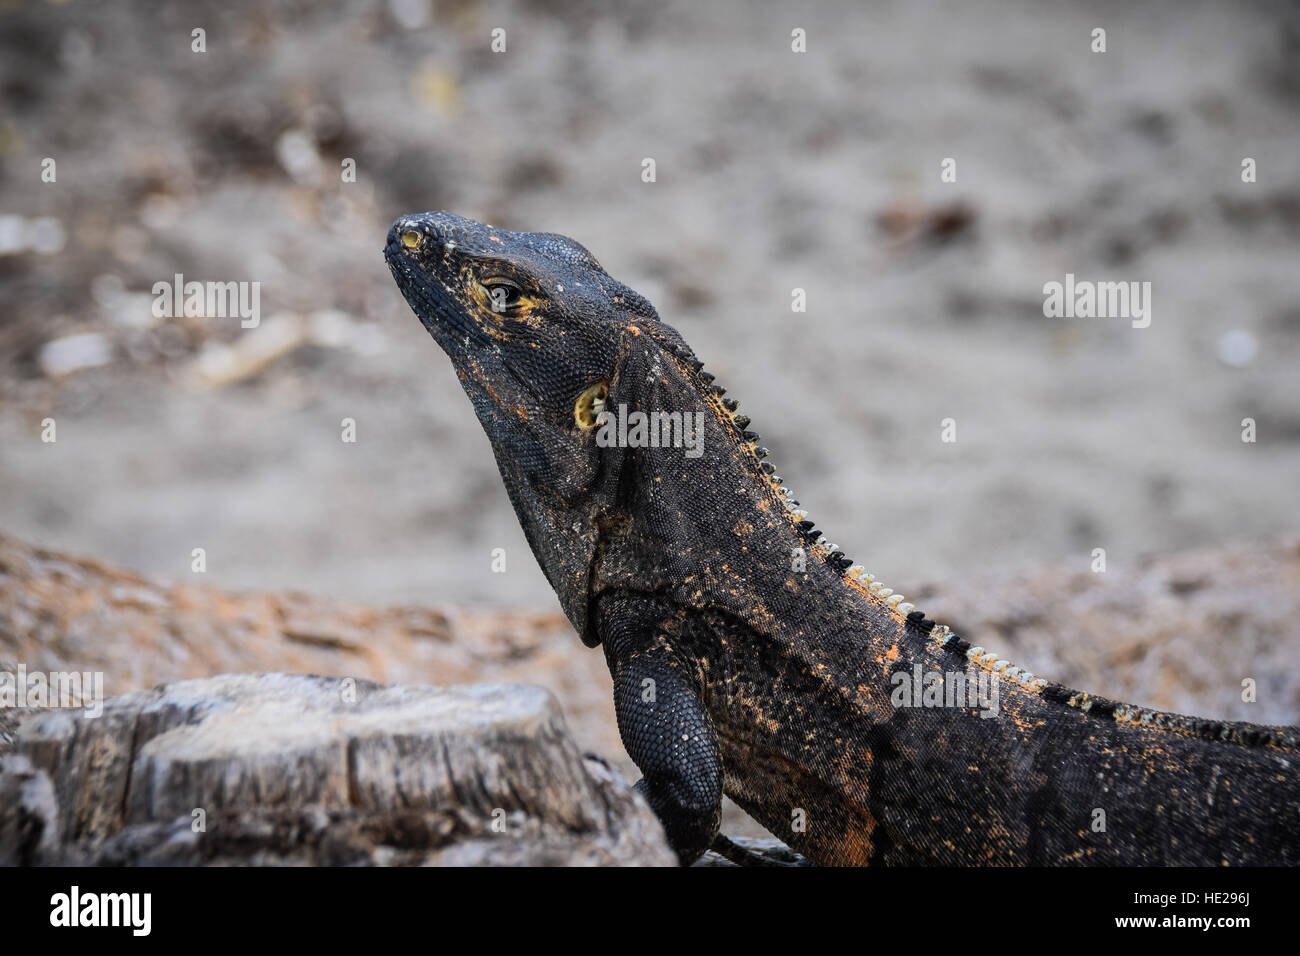 Iguana warming up on black sand of Costa Rica's Guanacaste beaches Stock Photo